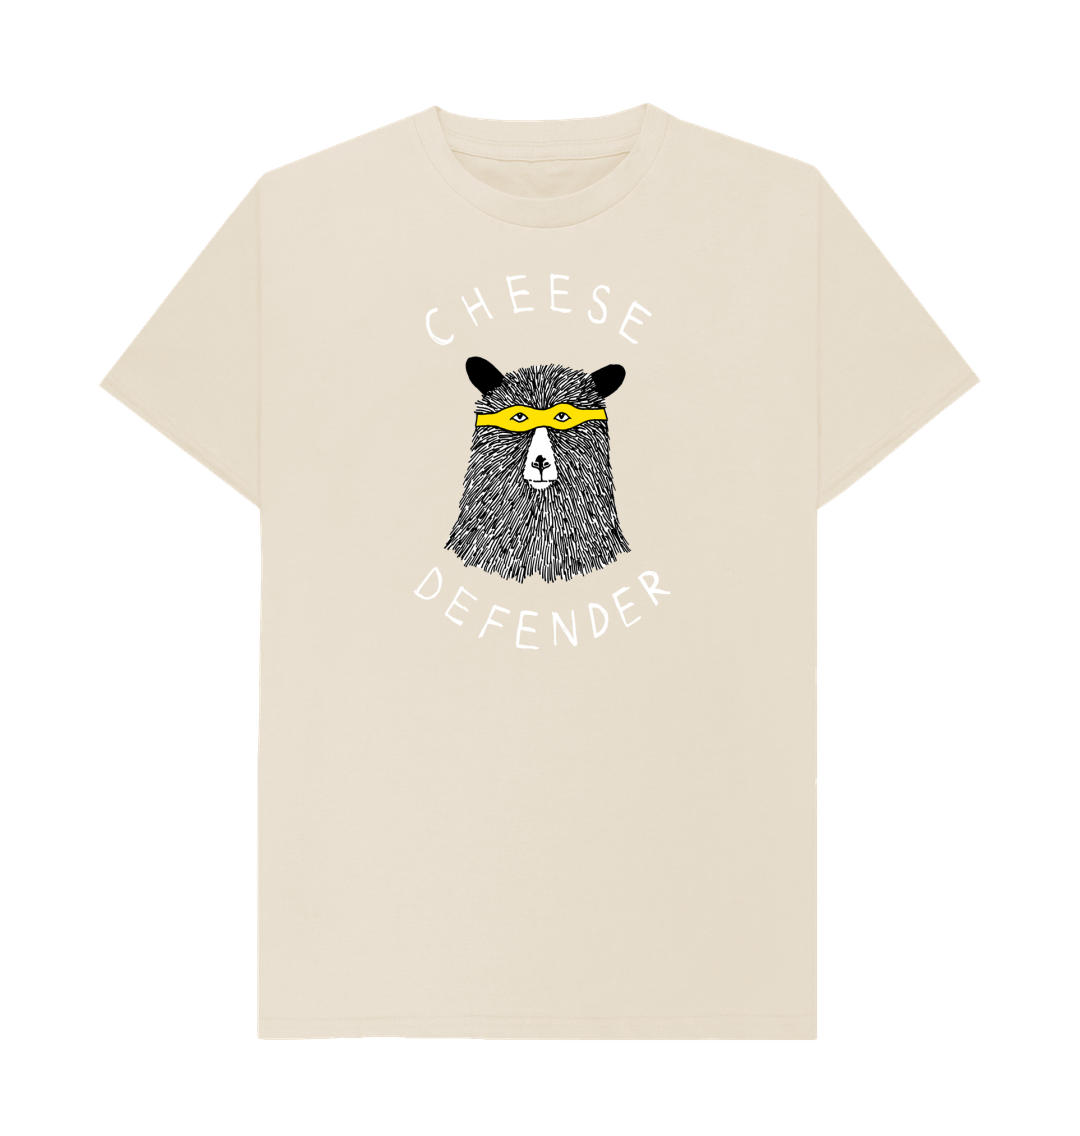 Oat 'Cheese Defender' Men's T-shirt